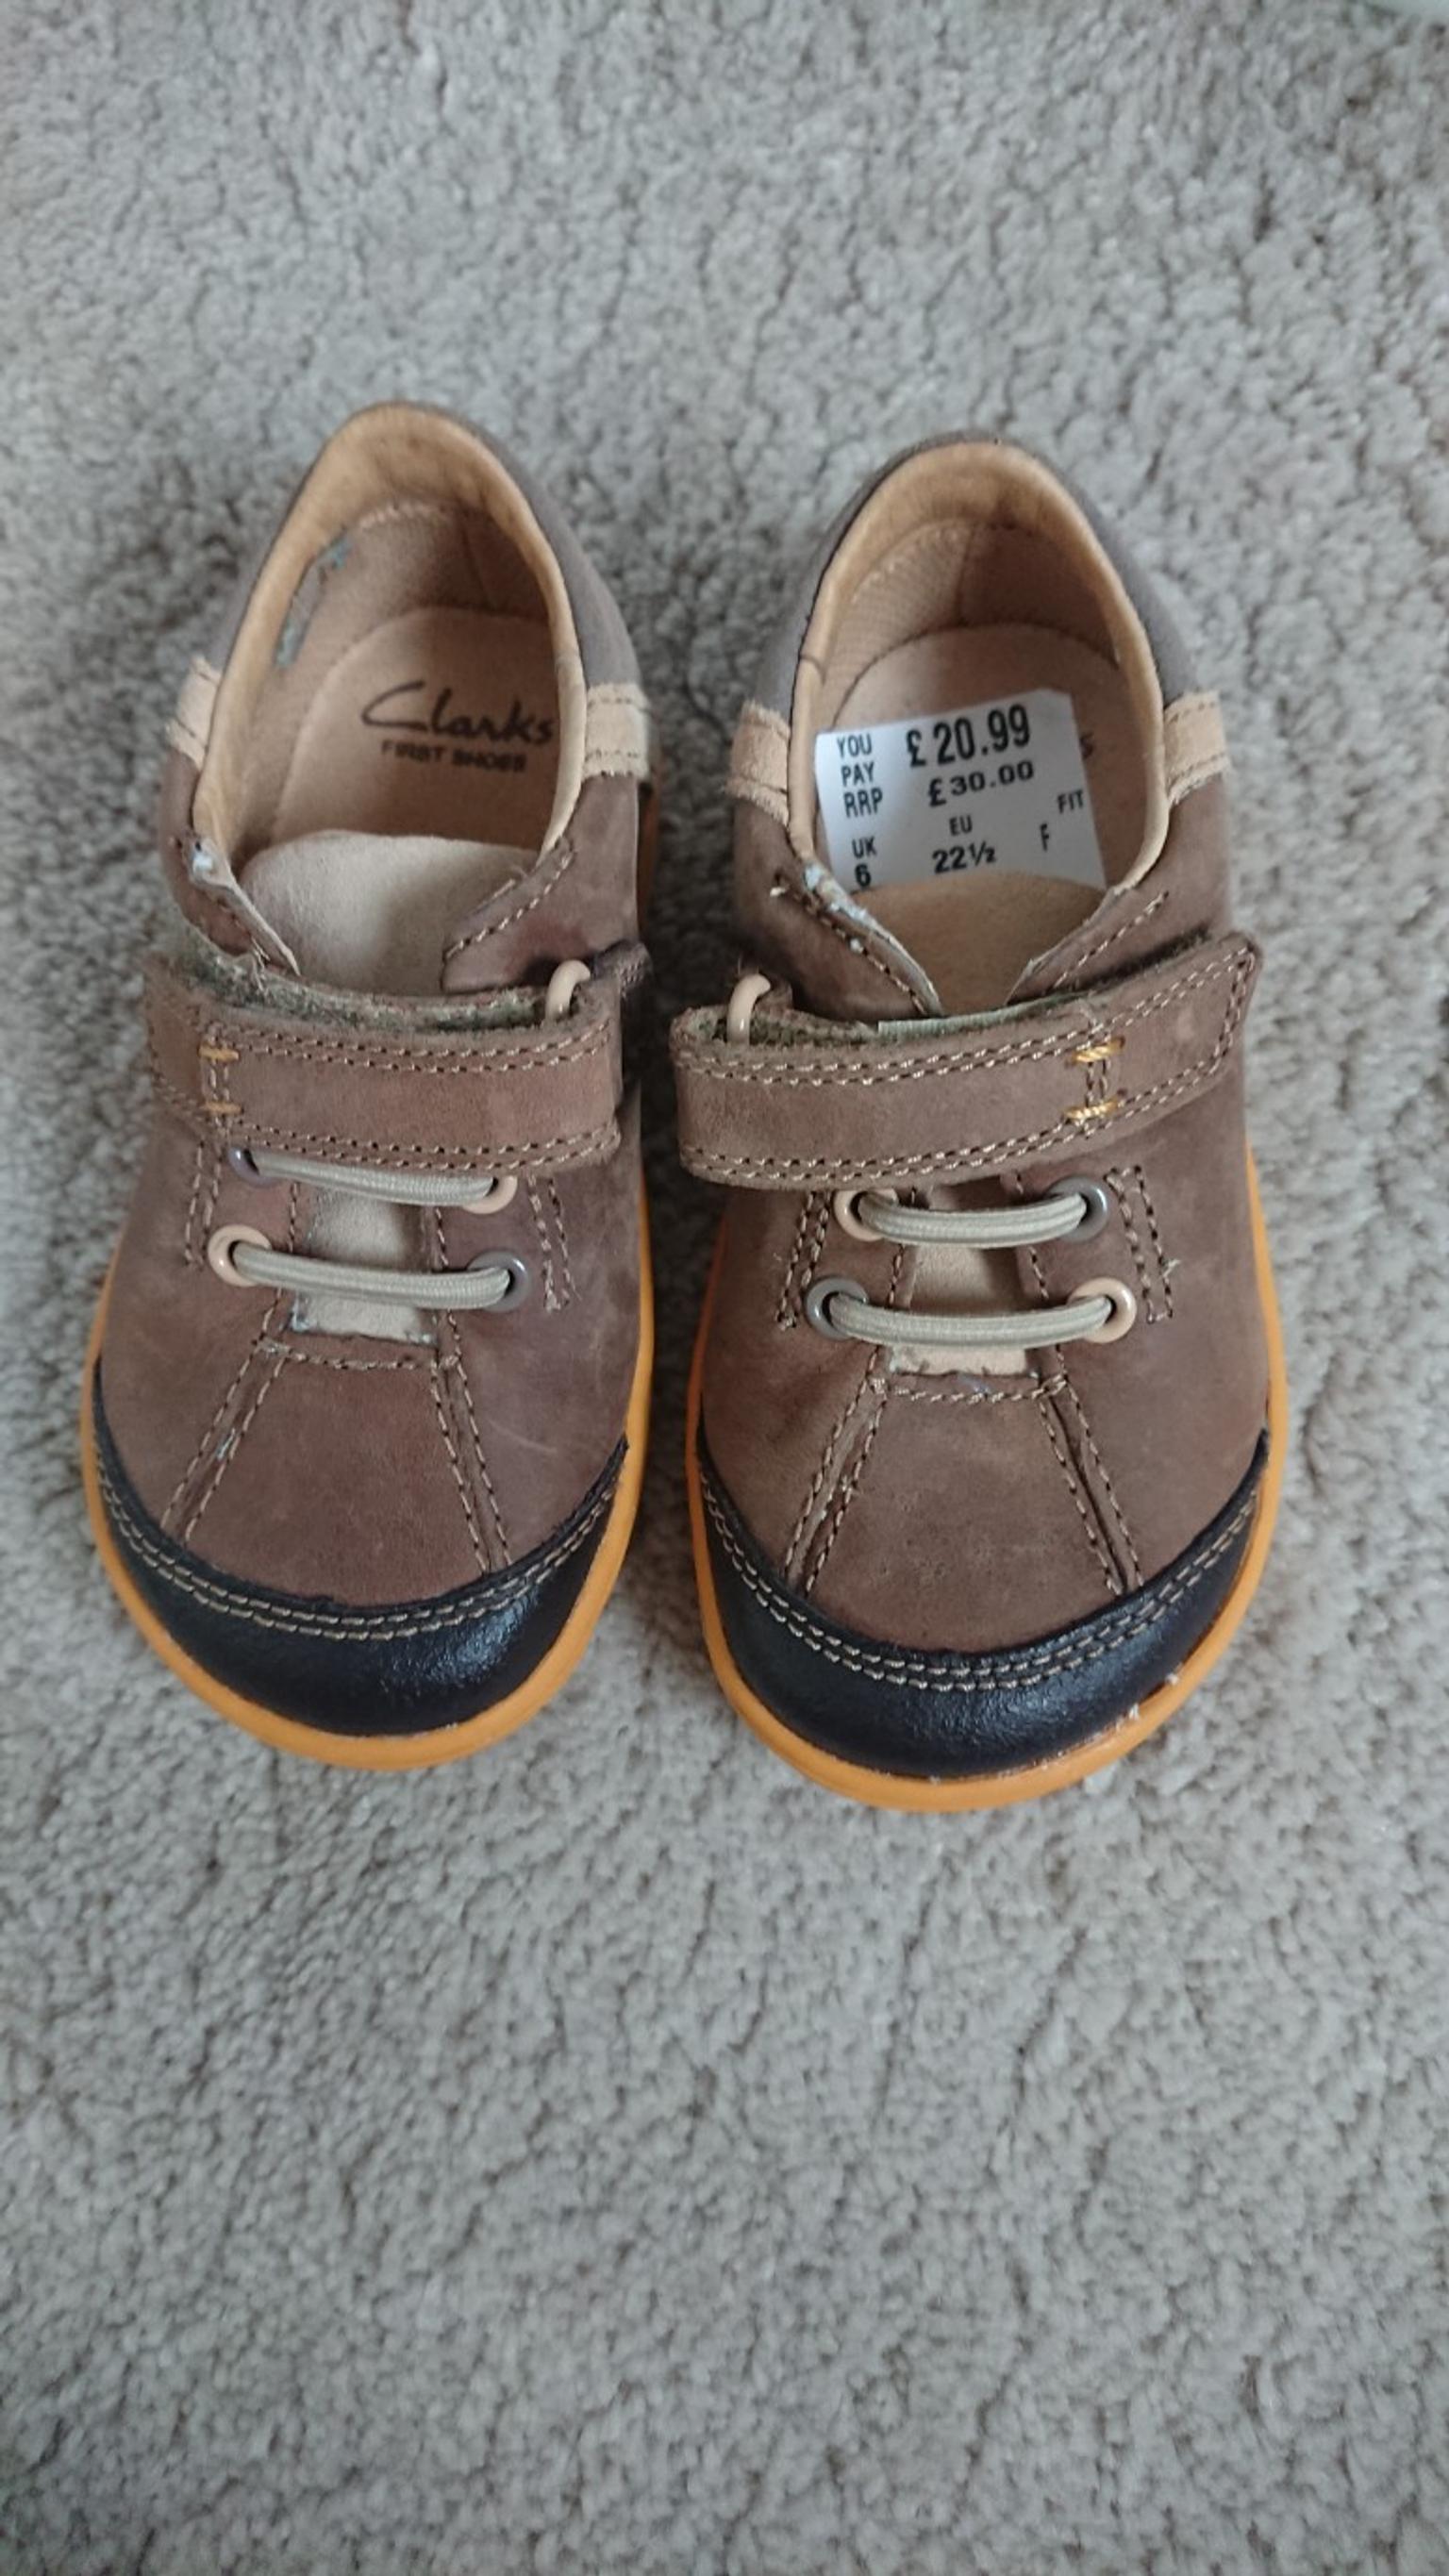 clarks toddler shoe size